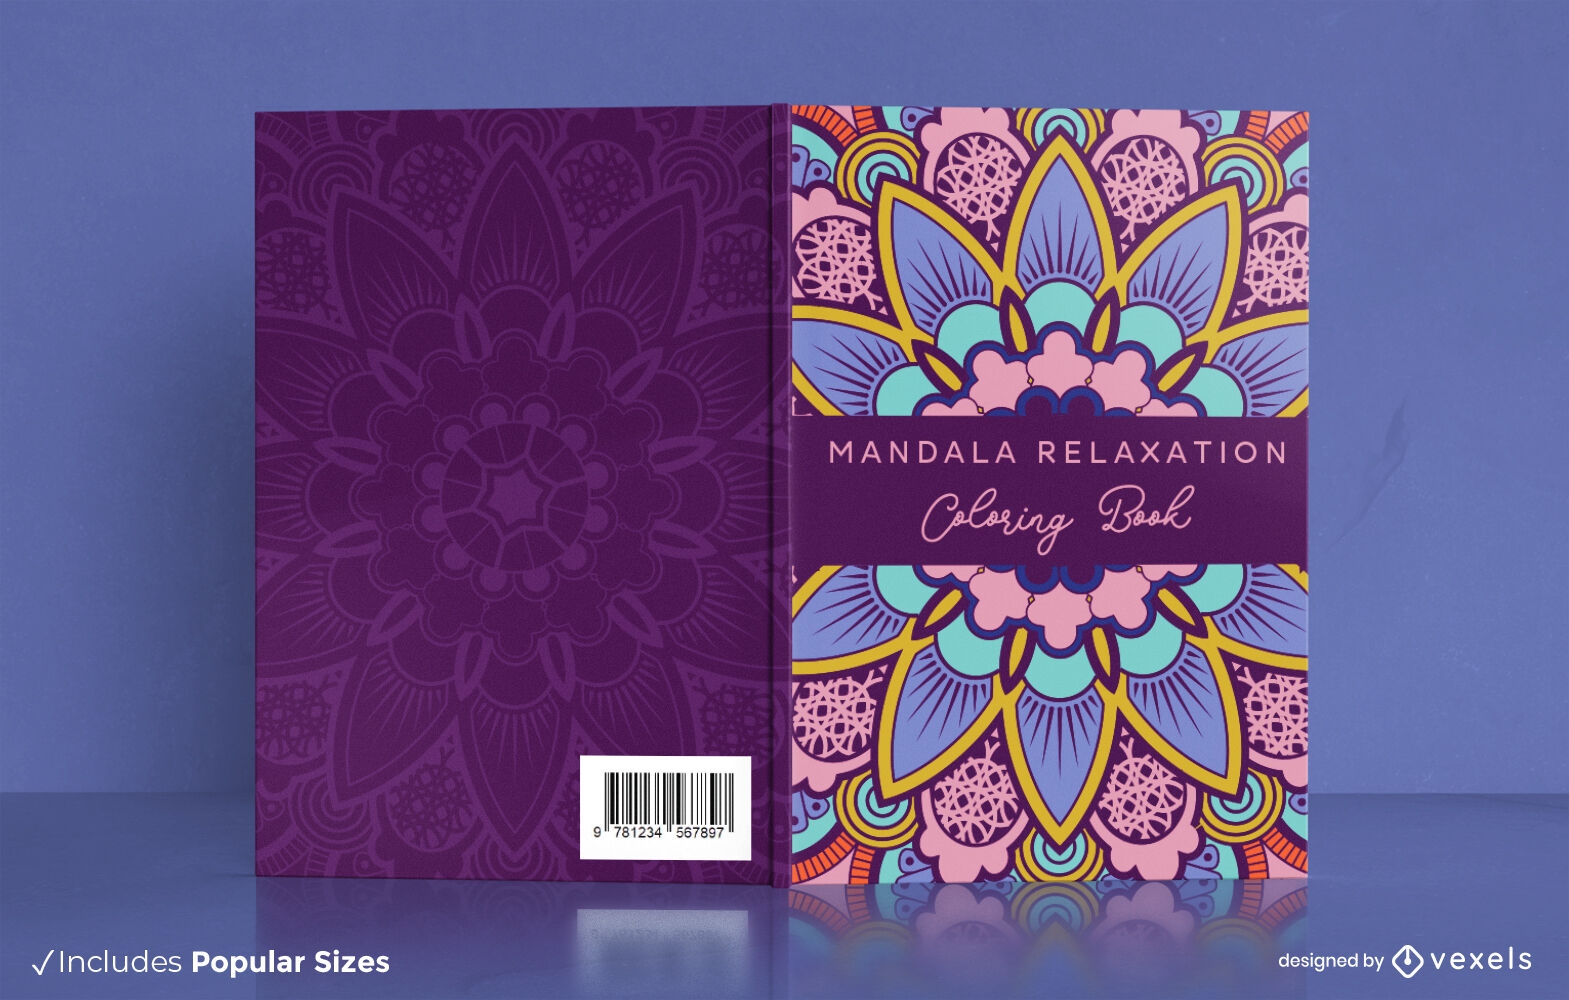 Mandala relaxation book cover design